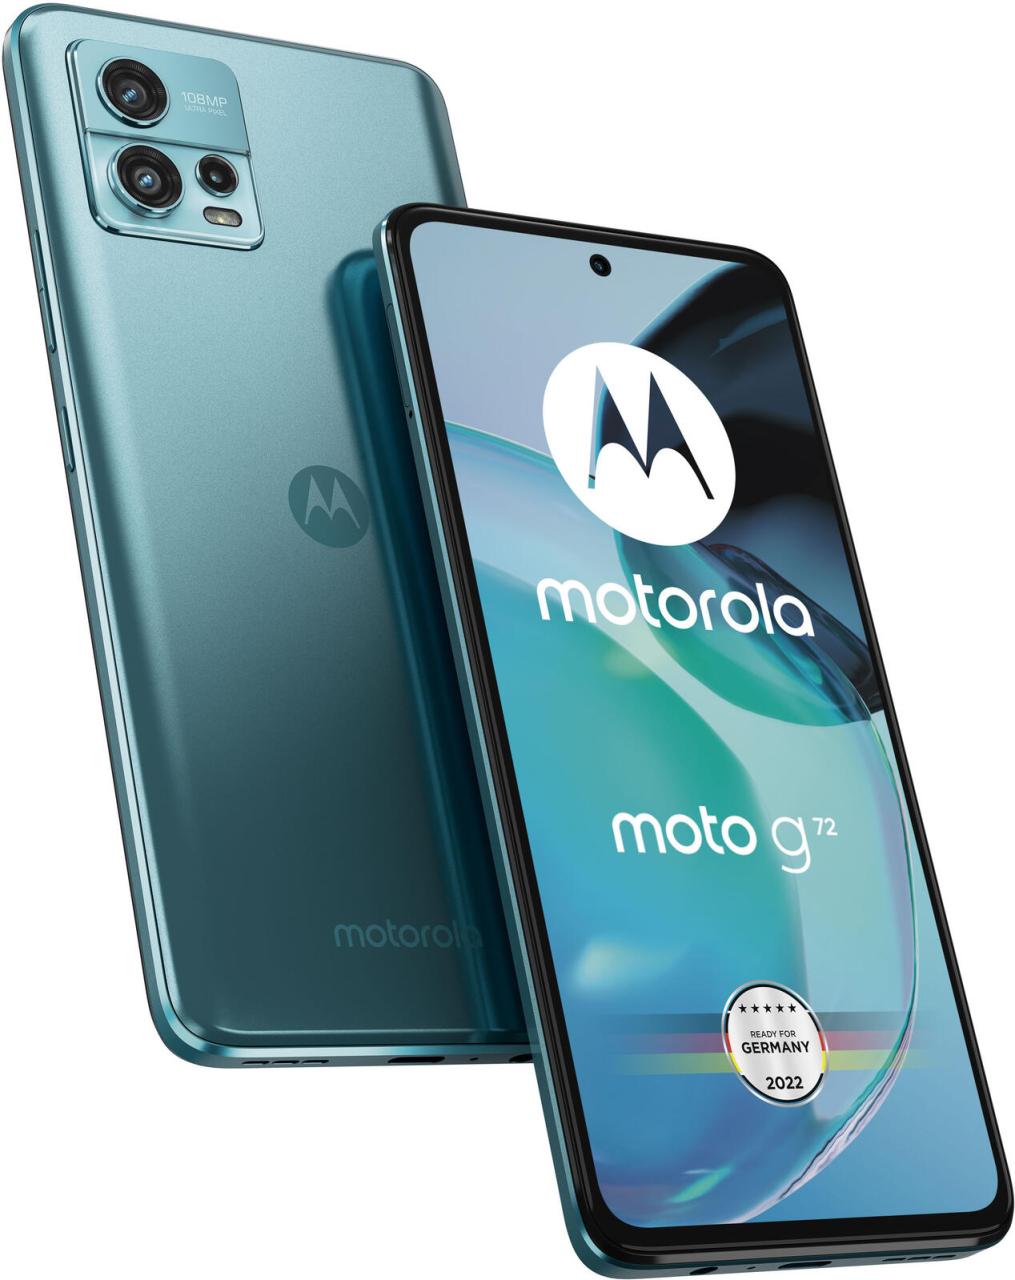 MOTOROLA Smartphone g72 Dual-SIM 128GB blau von Motorola